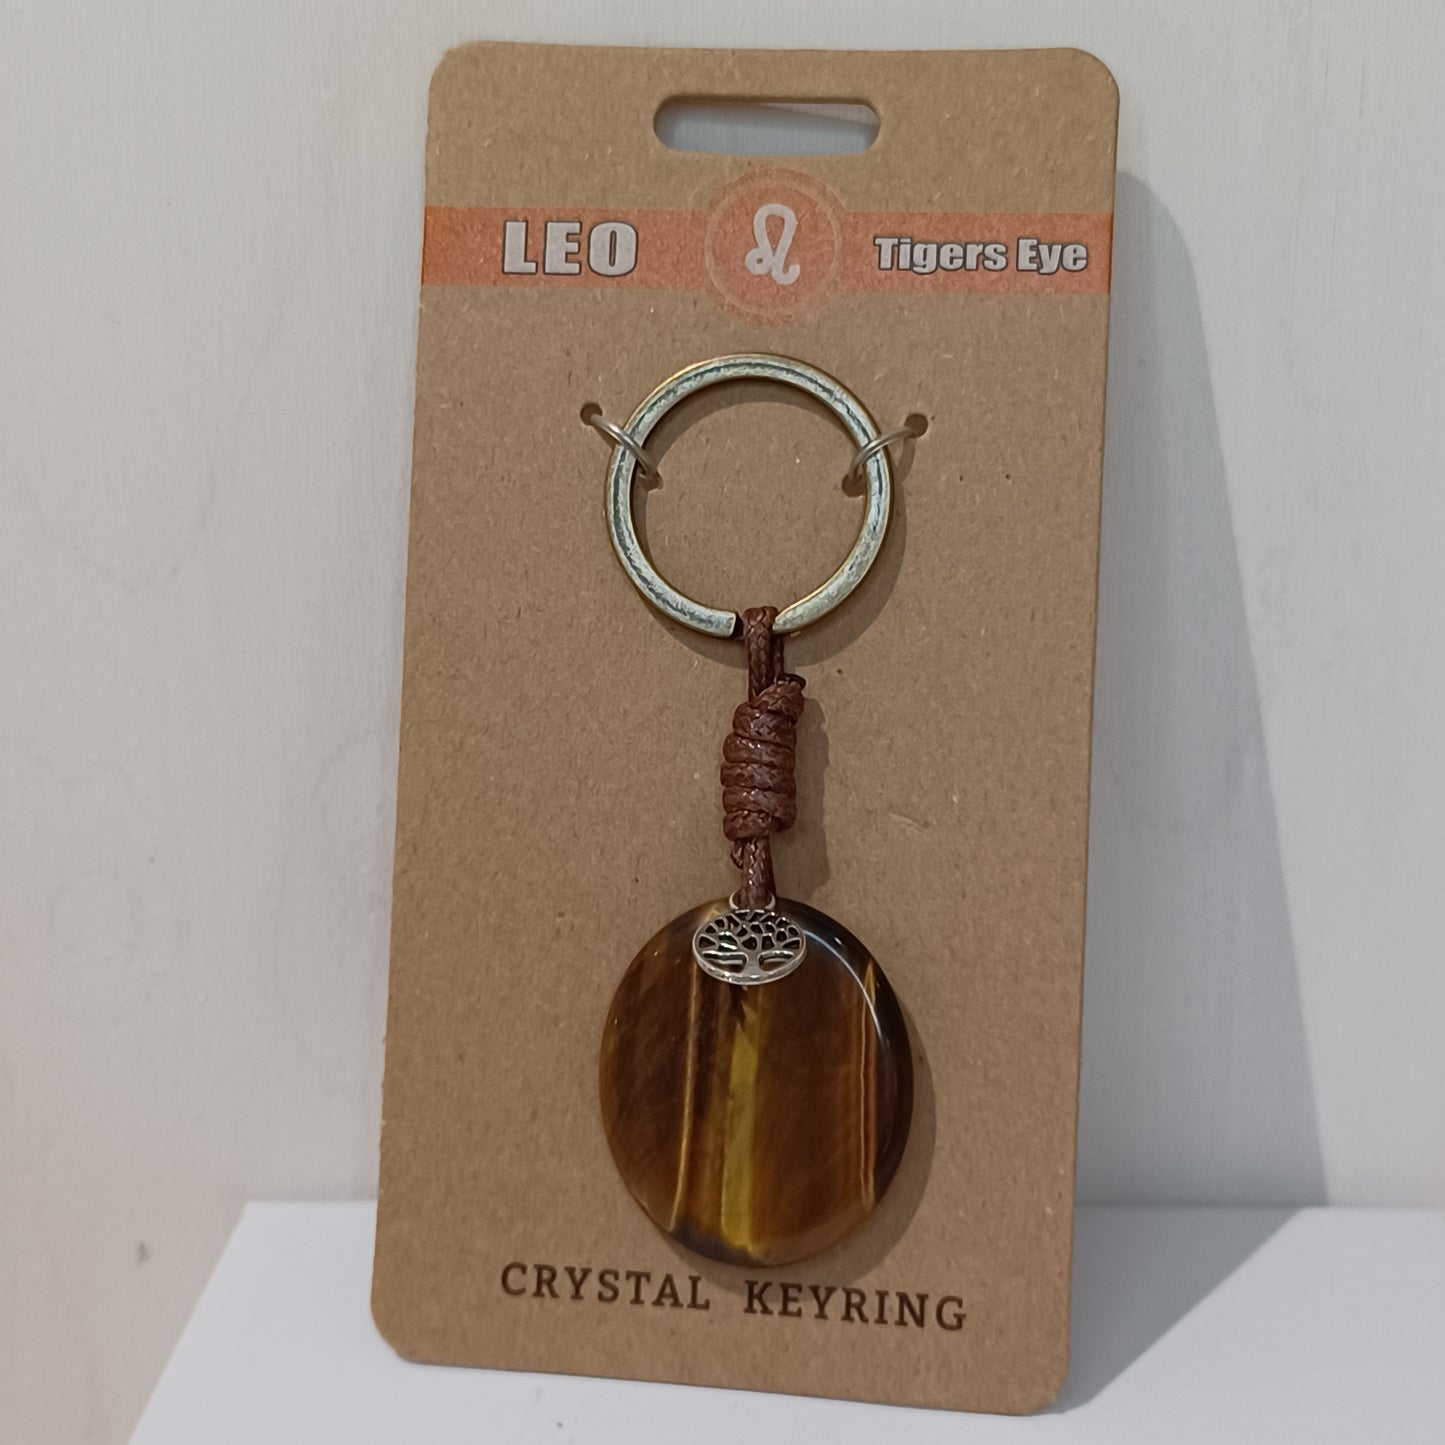 Crystal Keyring - Leo Tiger Eye